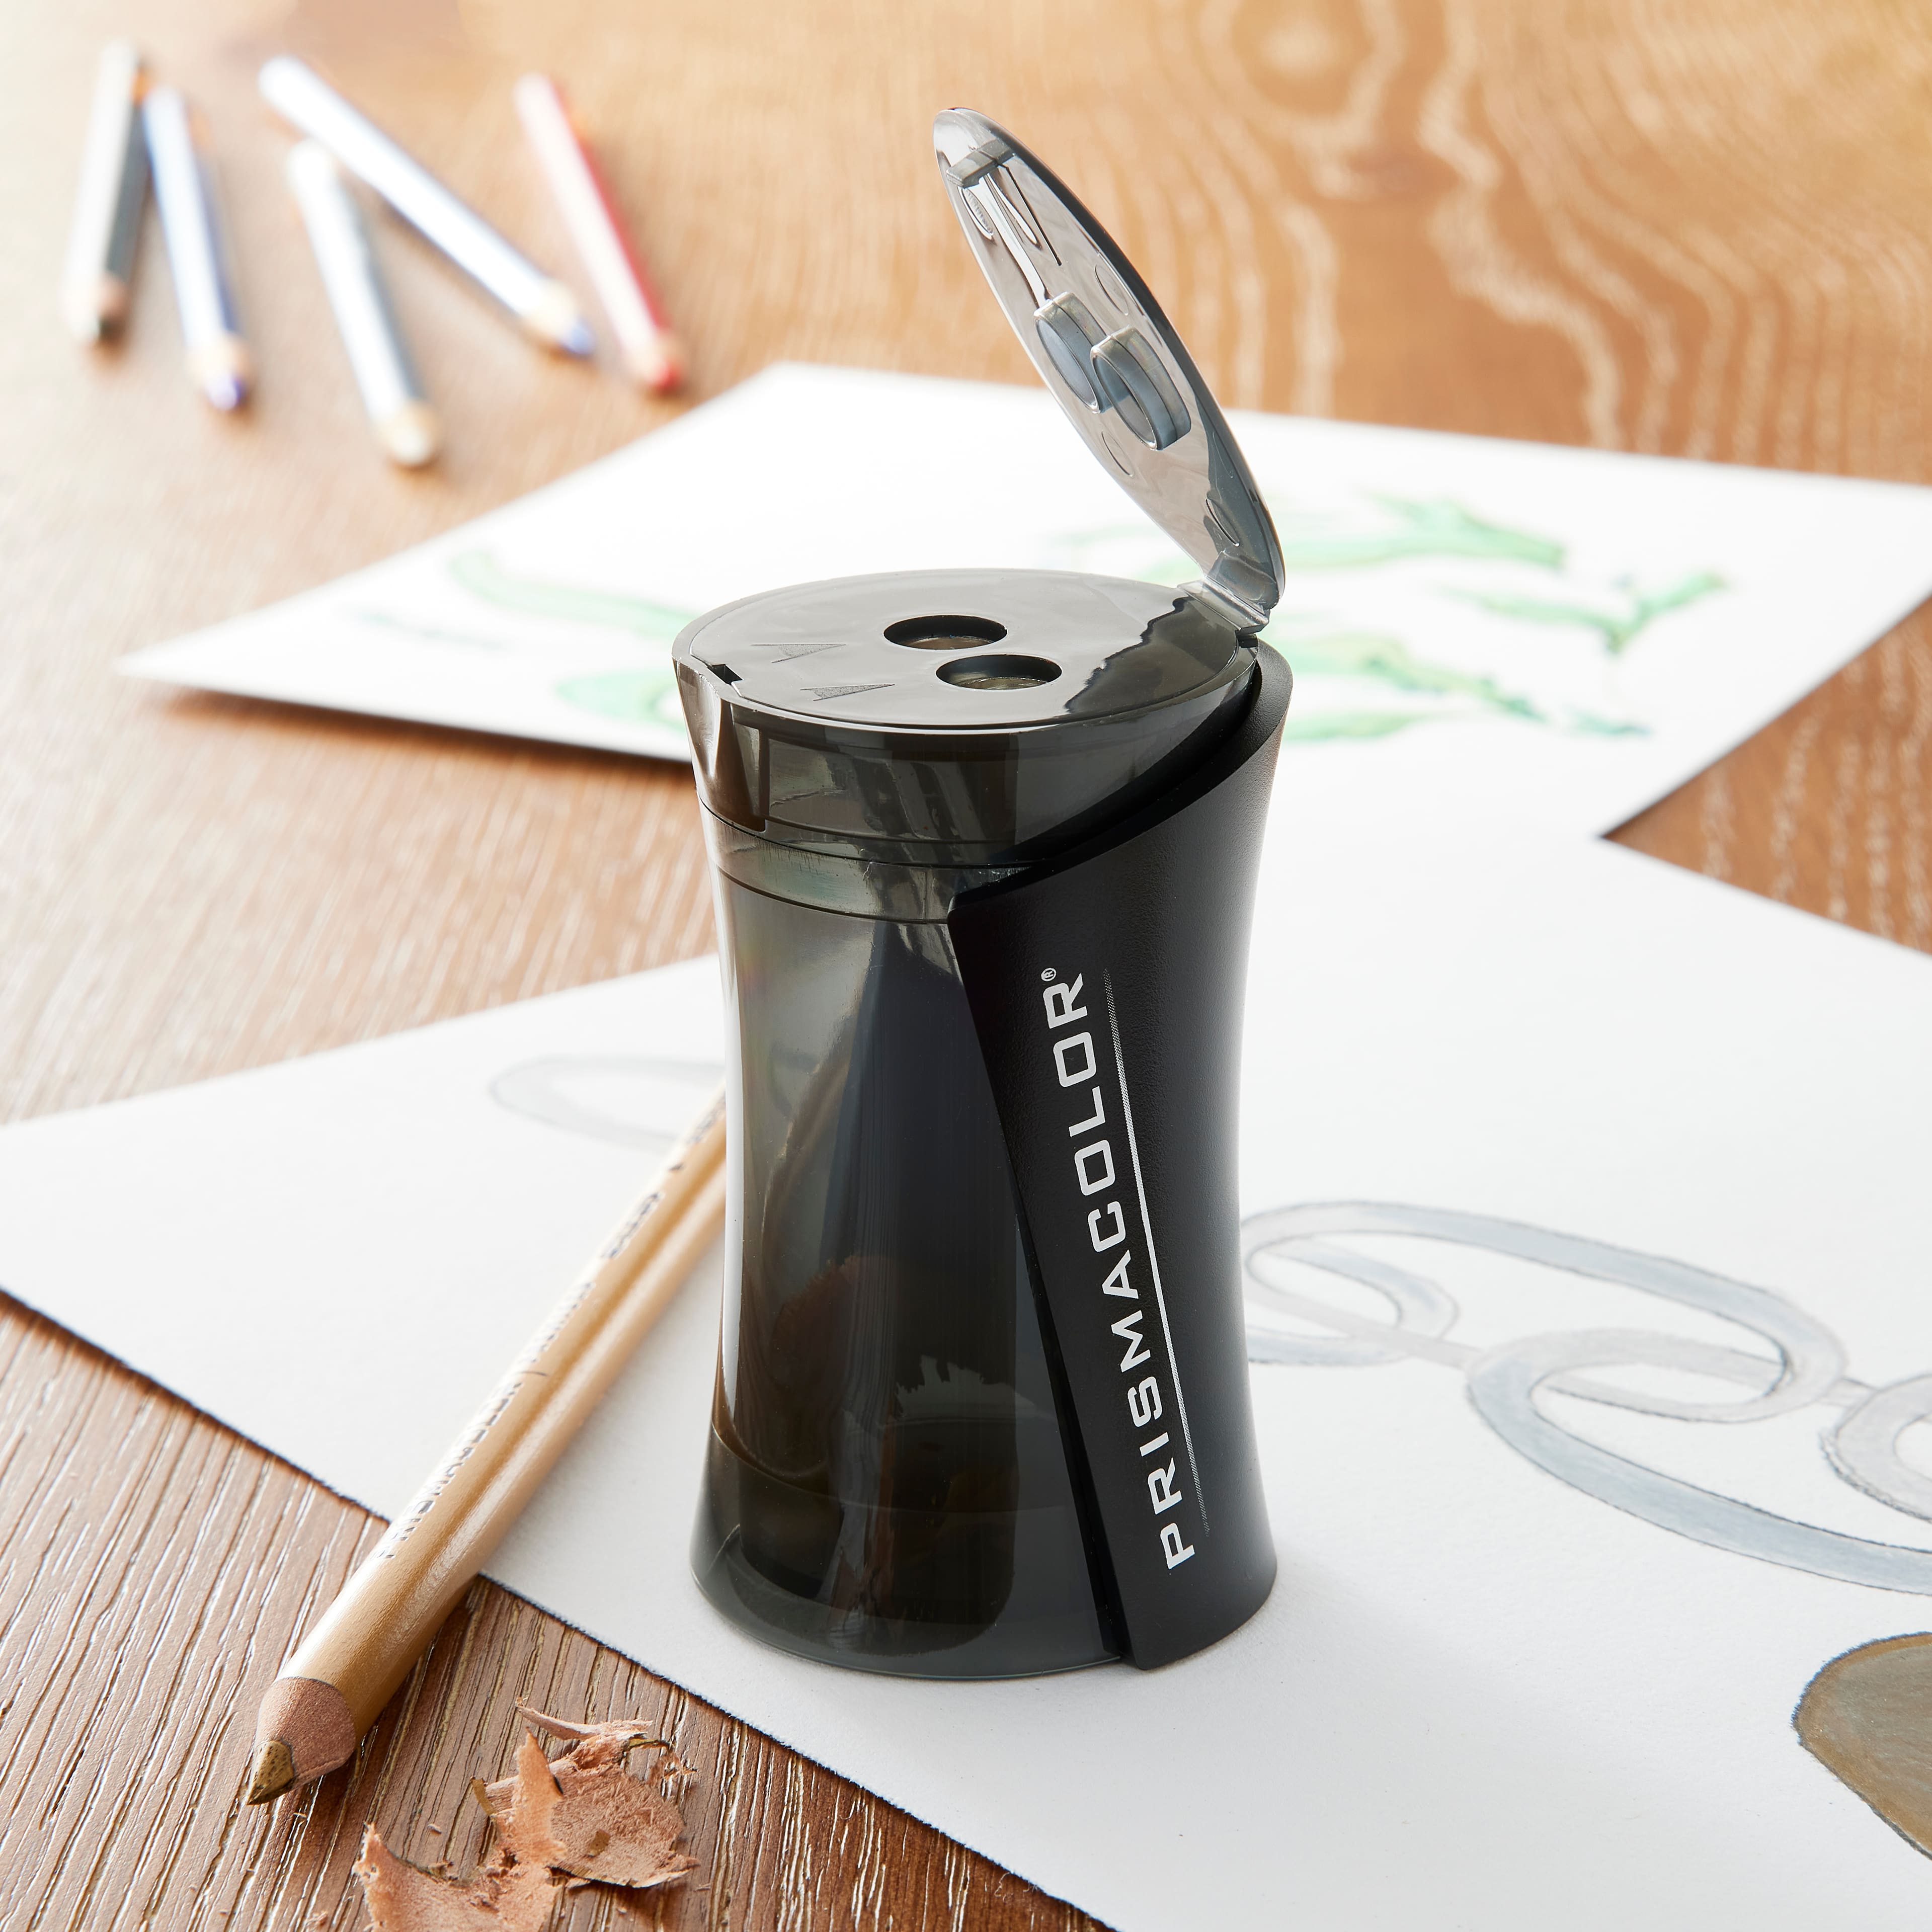  Prismacolor Premier Pencil Sharpener : Office Products